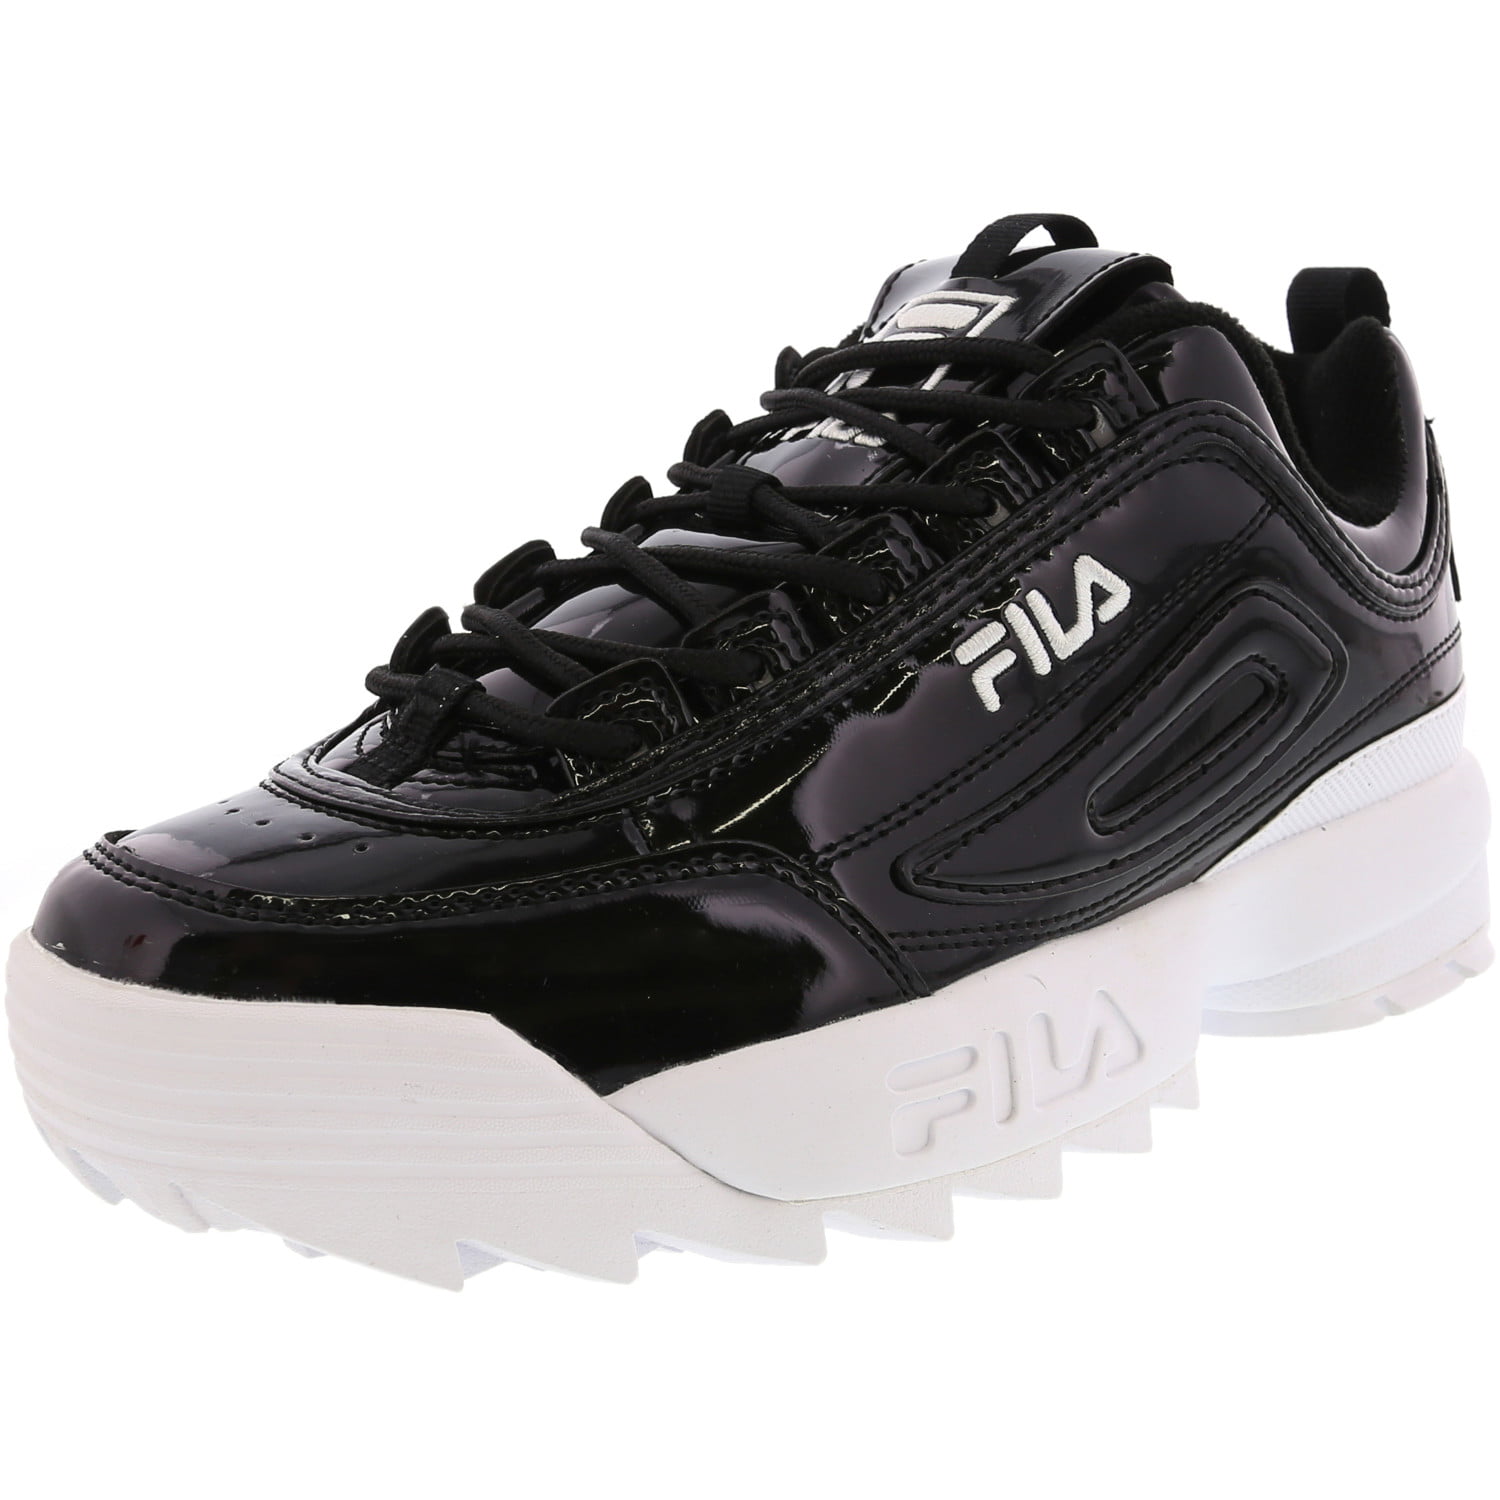 FILA - Fila Women's Disruptor Ii Premium Patent Black/White/White Ankle ...